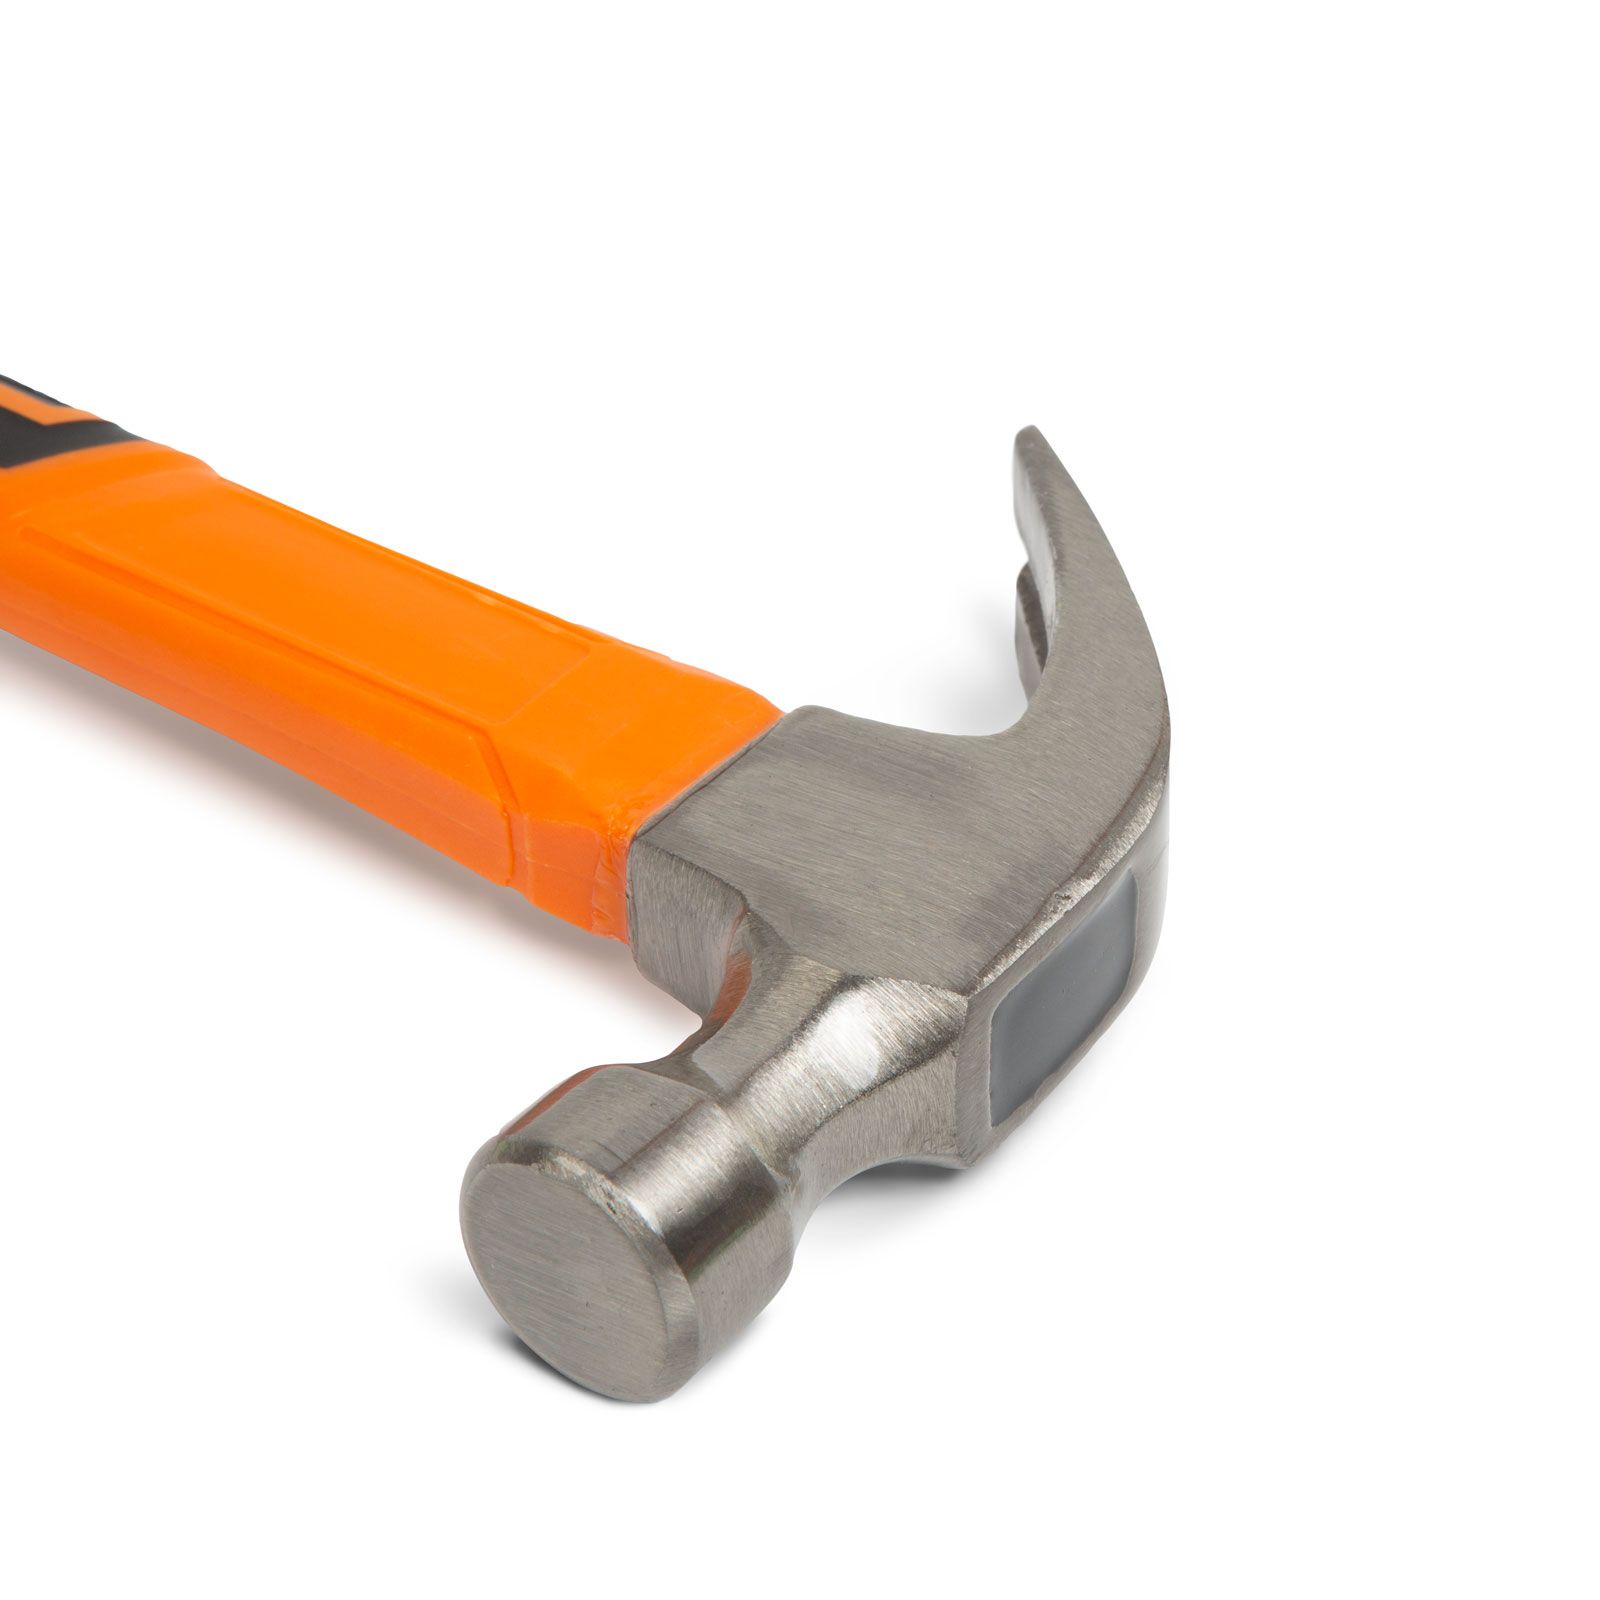 Professional claw hammer - 450 g thumb